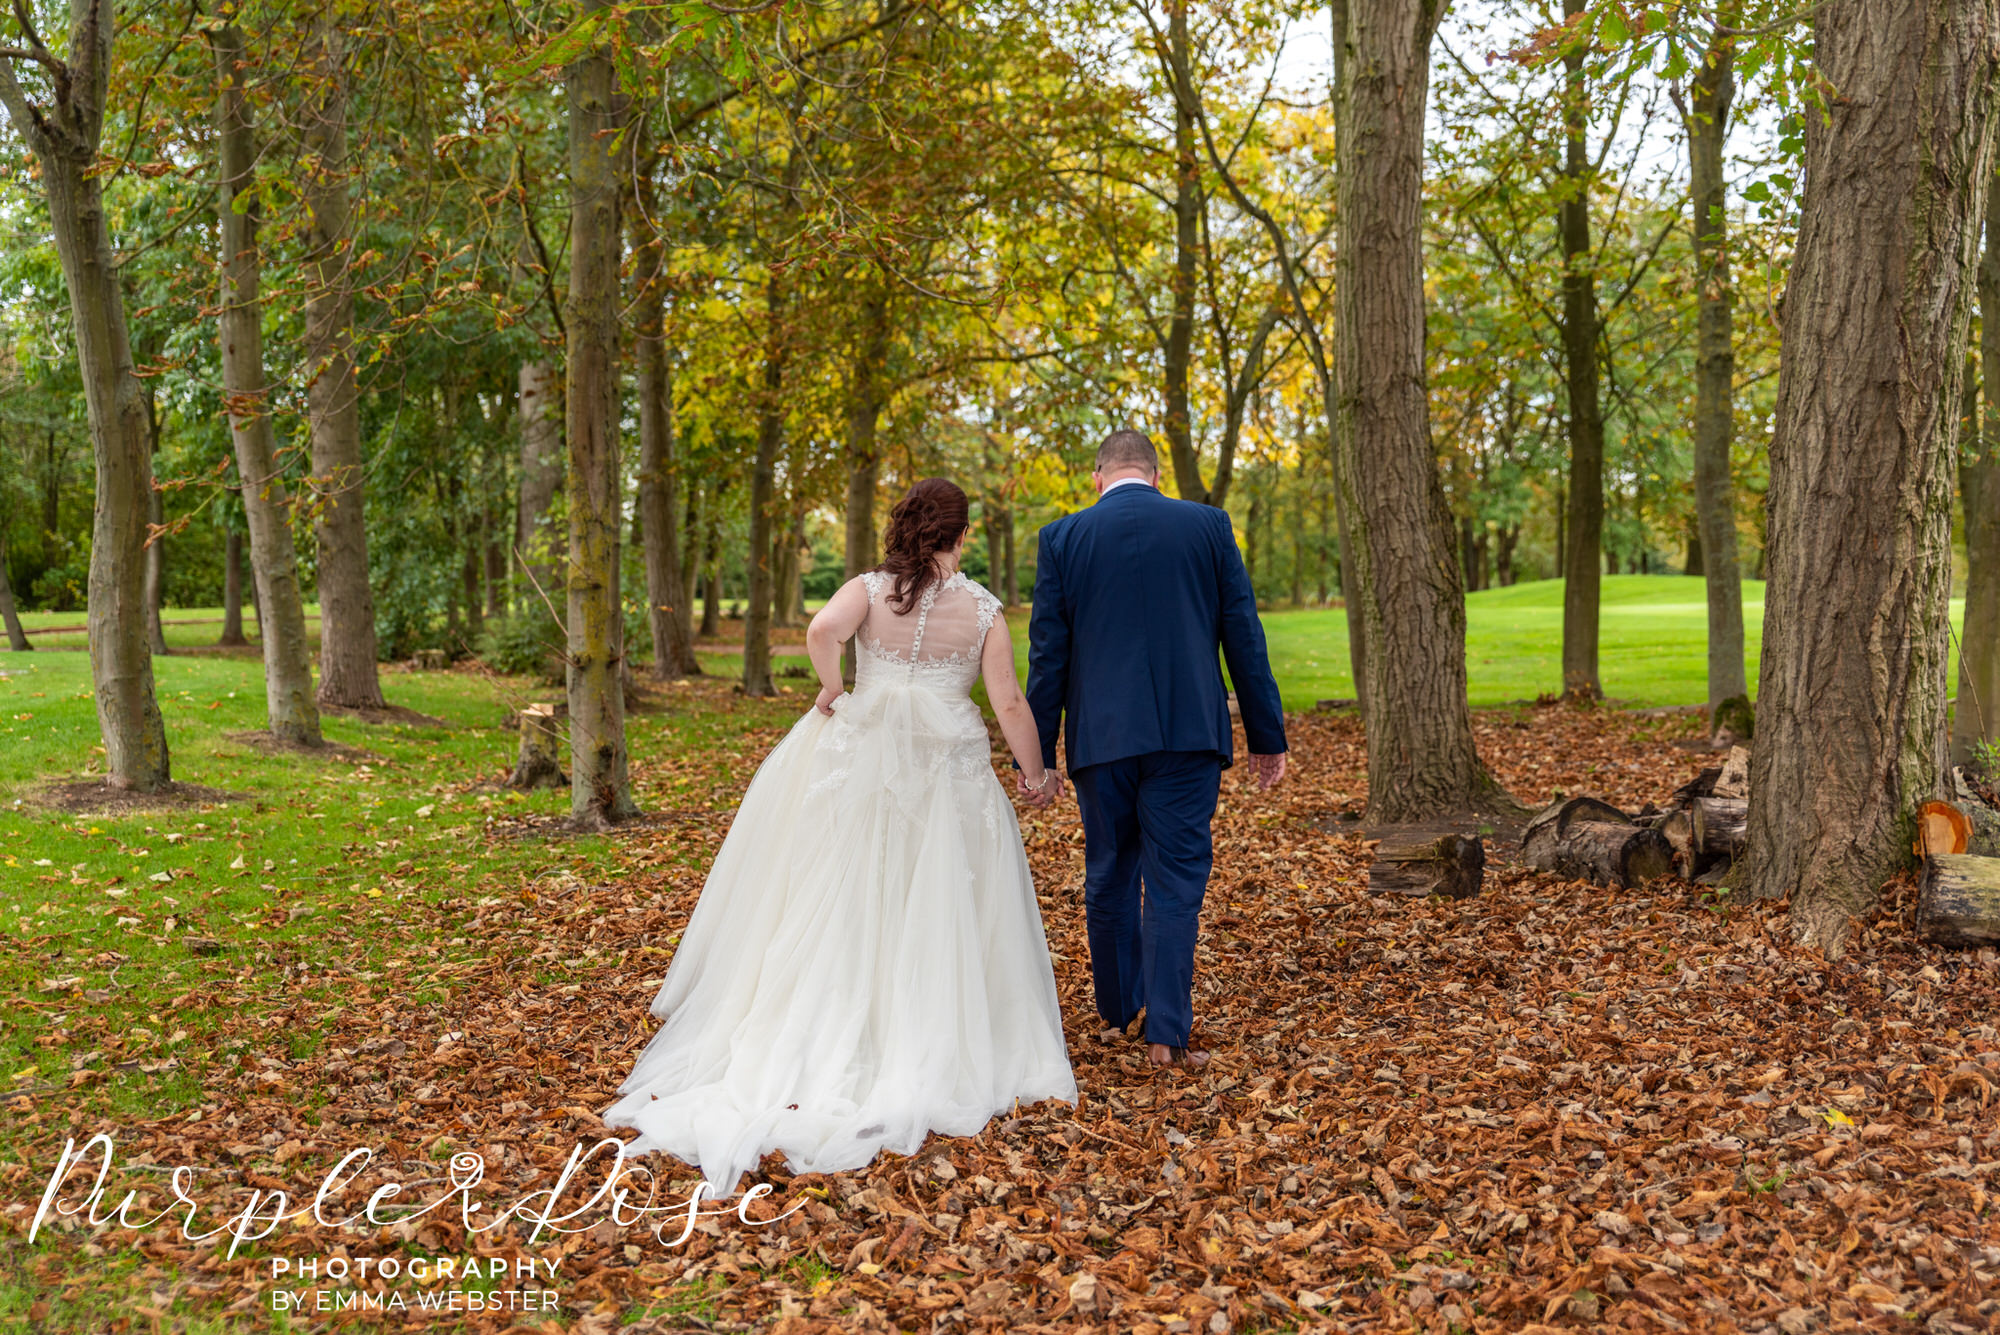 Bride and groom walking through autumn leafs